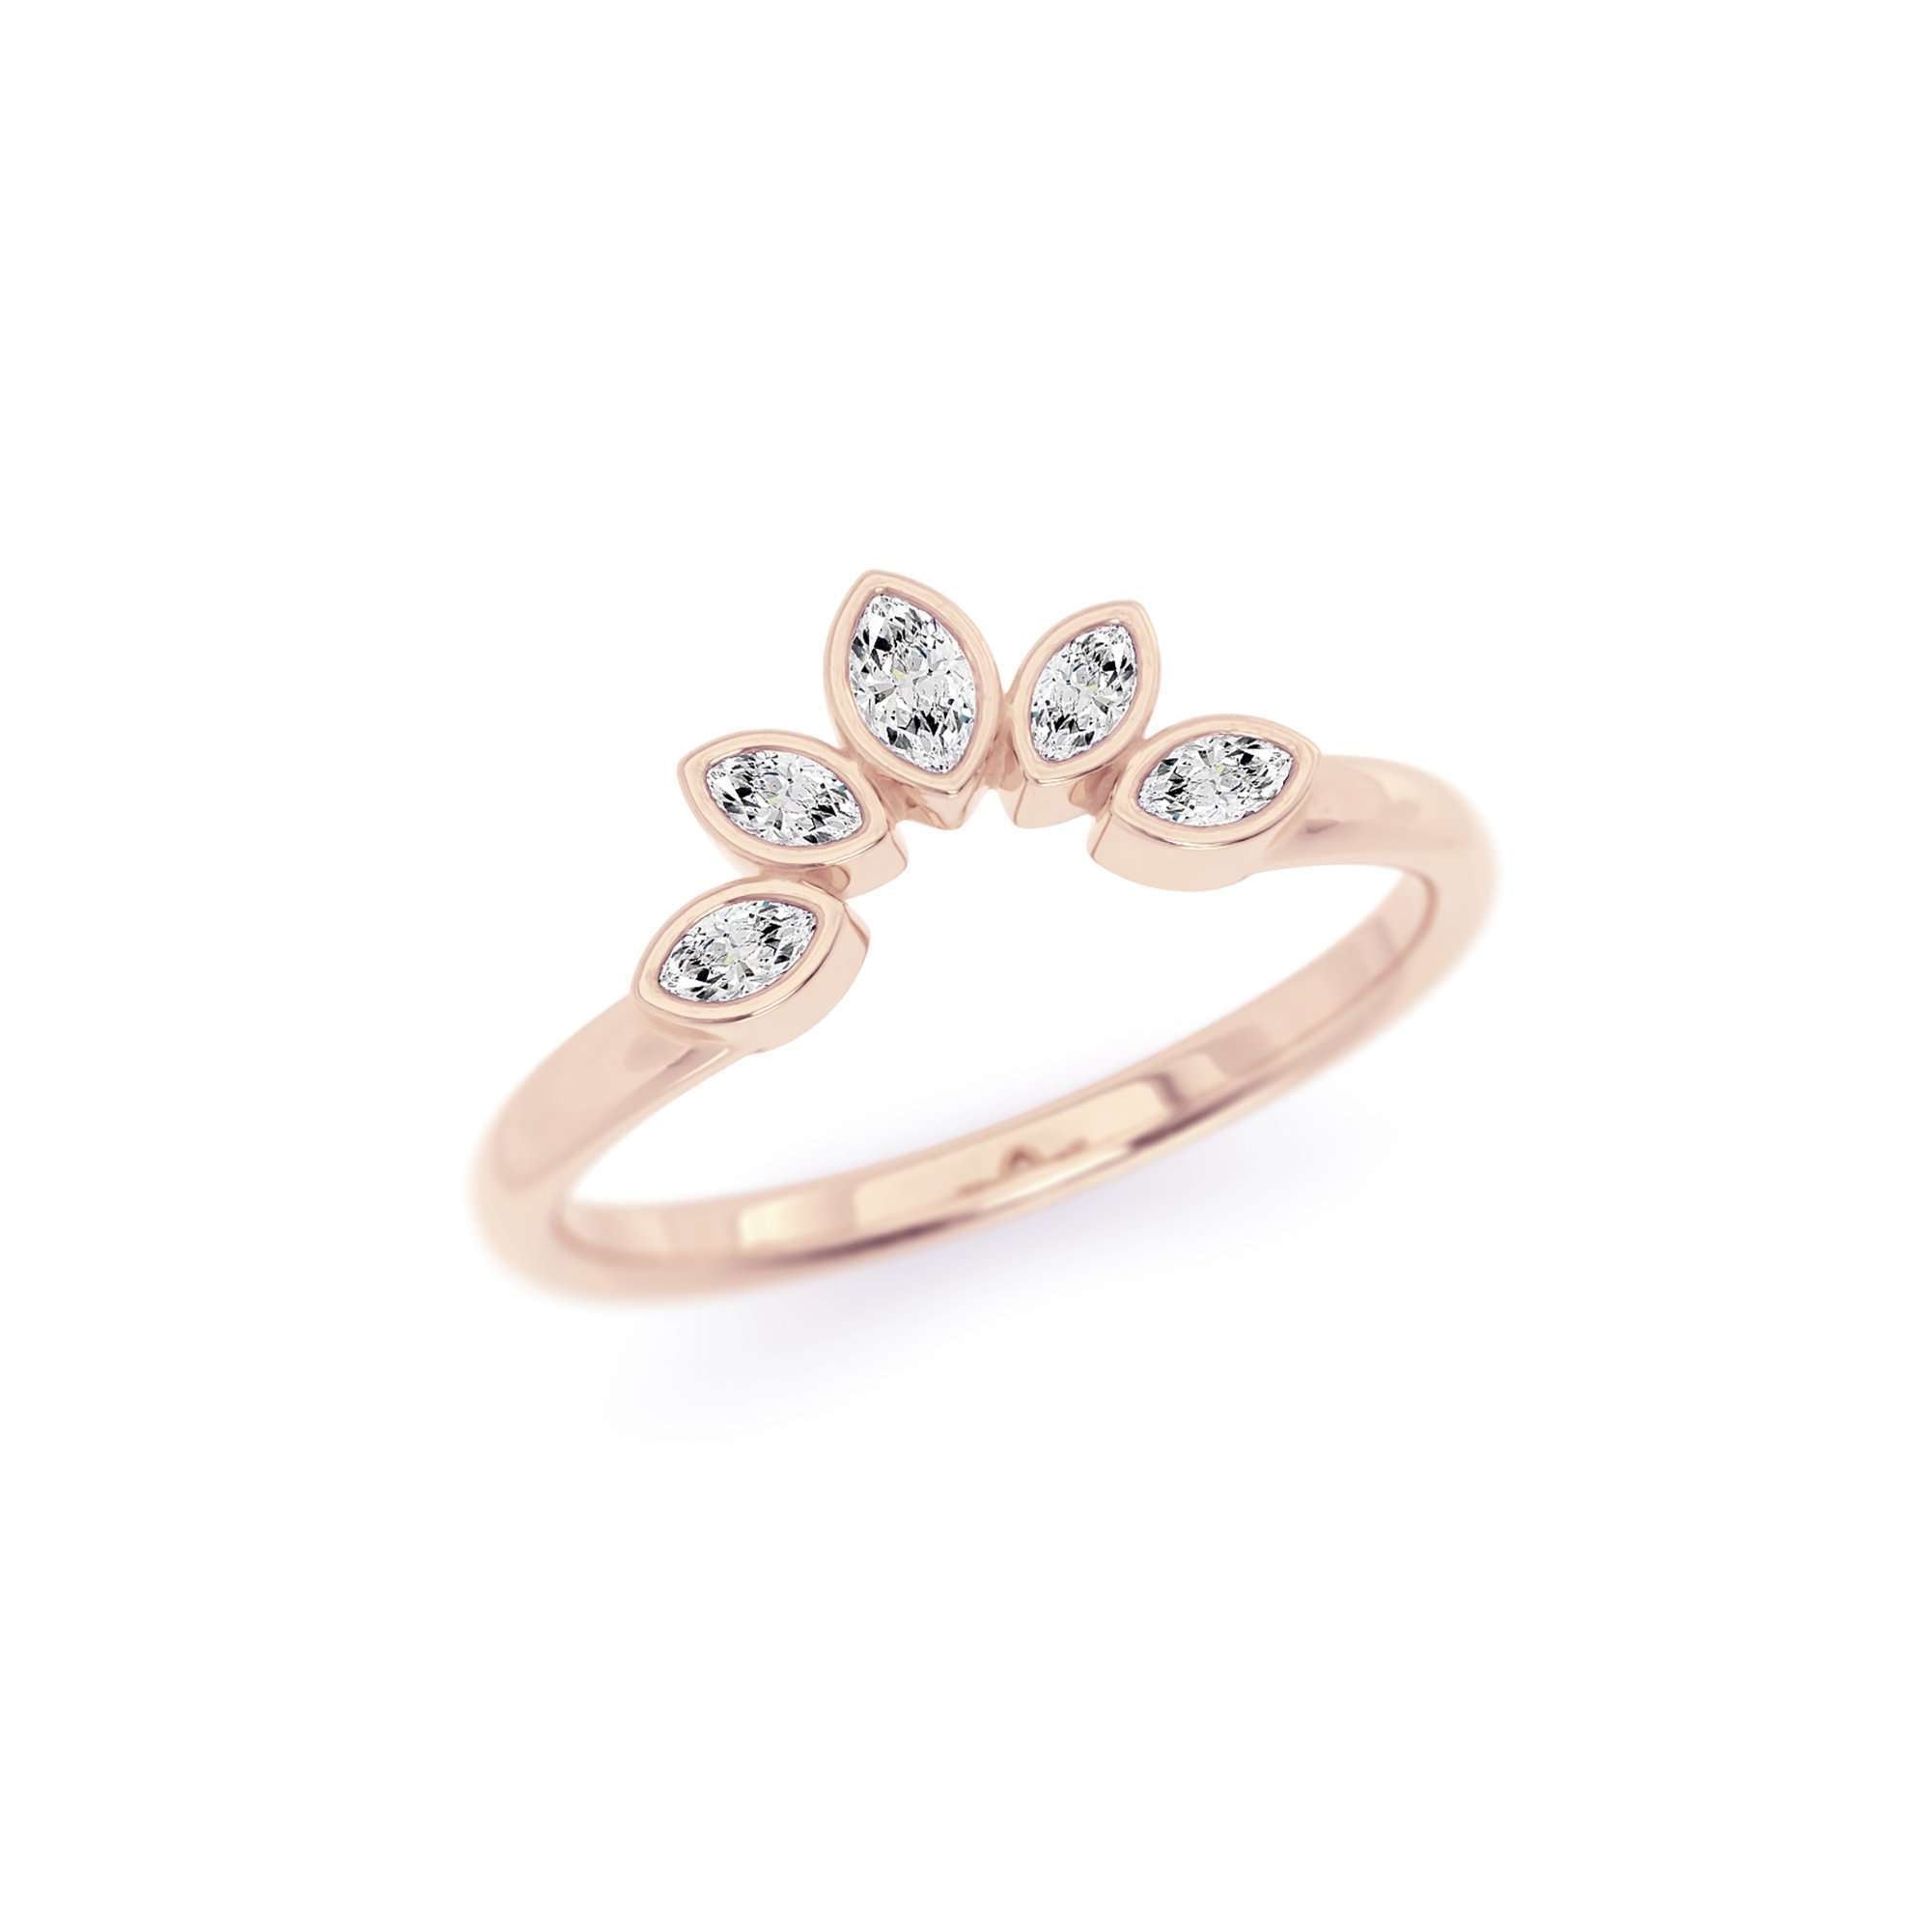 2 2 Marquise Diamond Ring Enhancer 14k Rose Gold 52884b6a c744 45ca b1d9